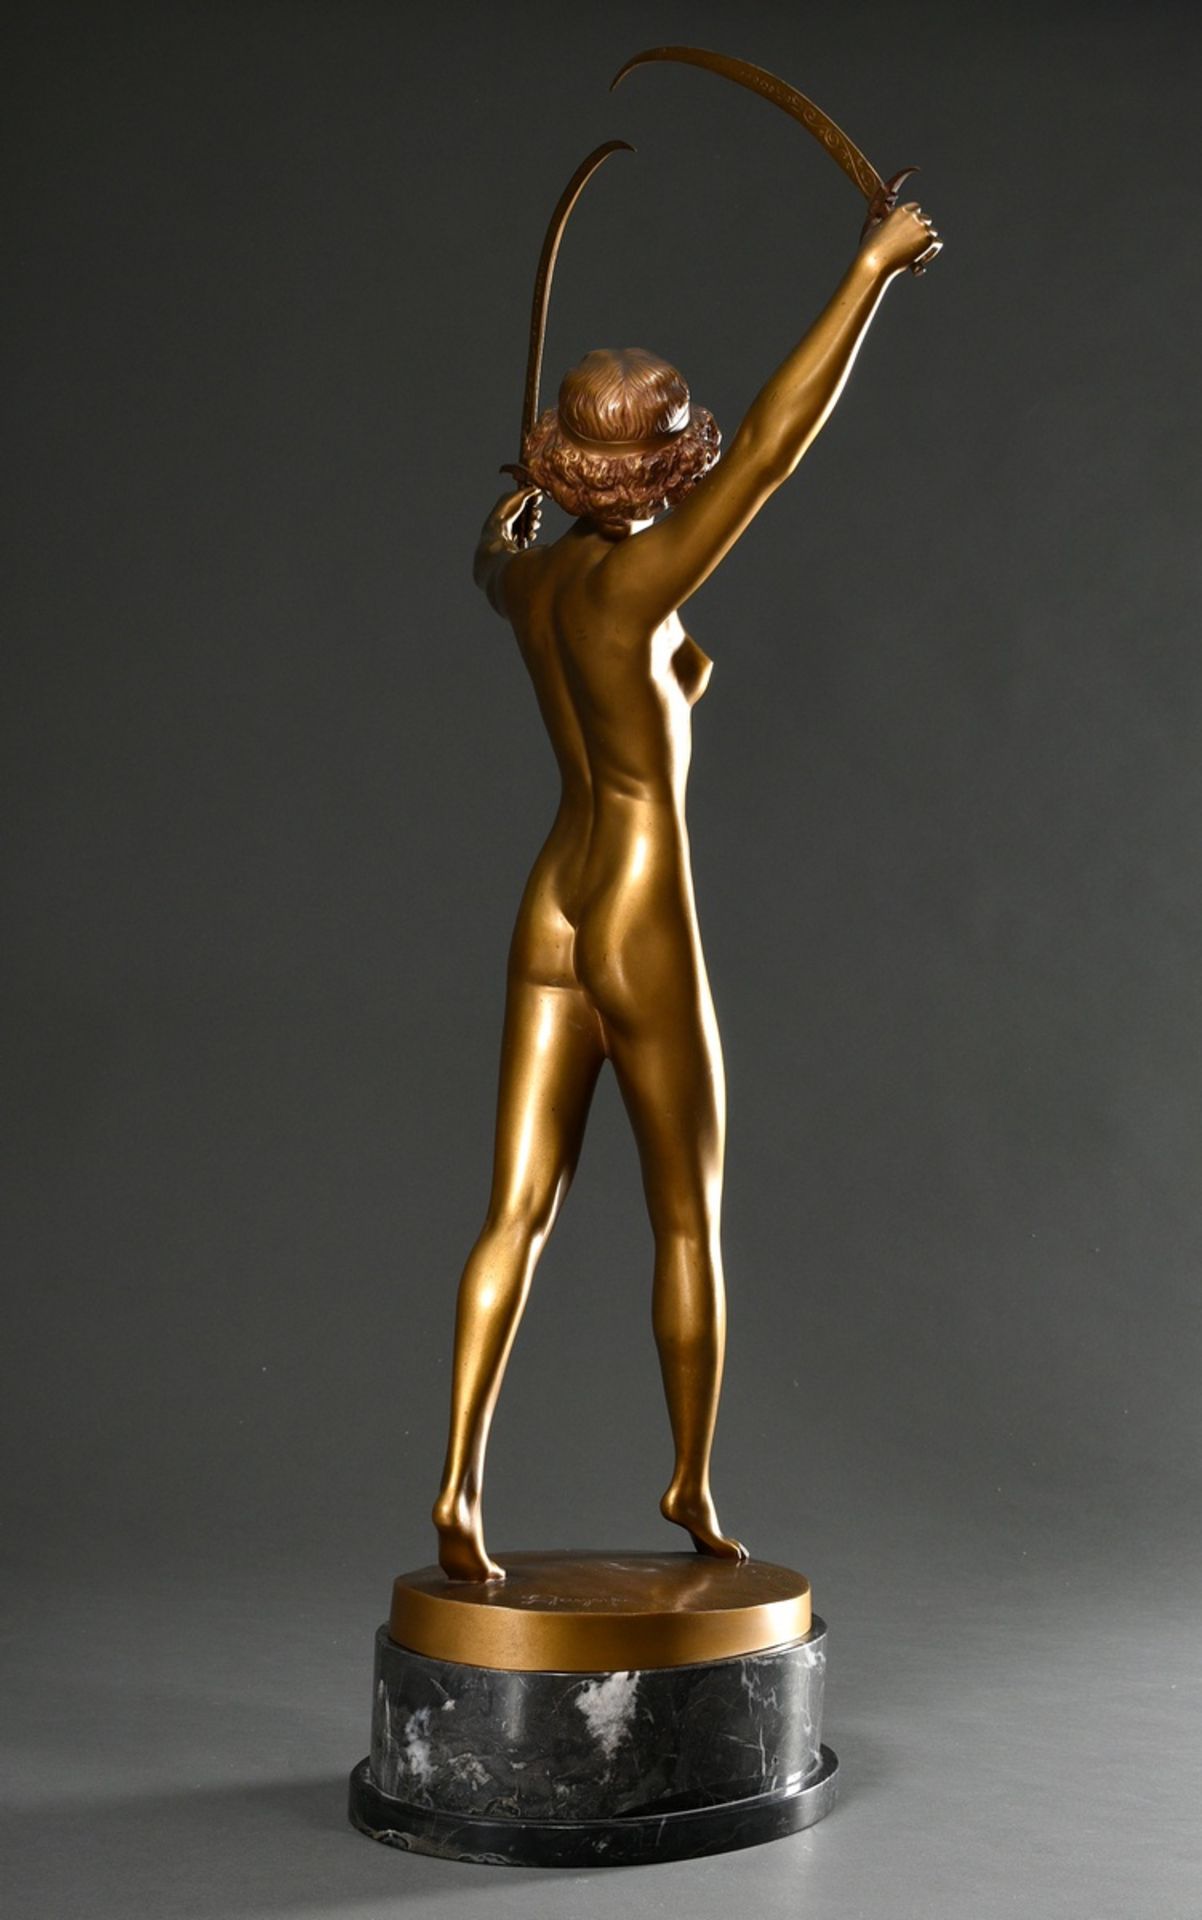 Jaeger, Gotthilf (1871-1933) "Sabre Dancer", around 1925, bronze with gold patina on grey marble pl - Image 6 of 10